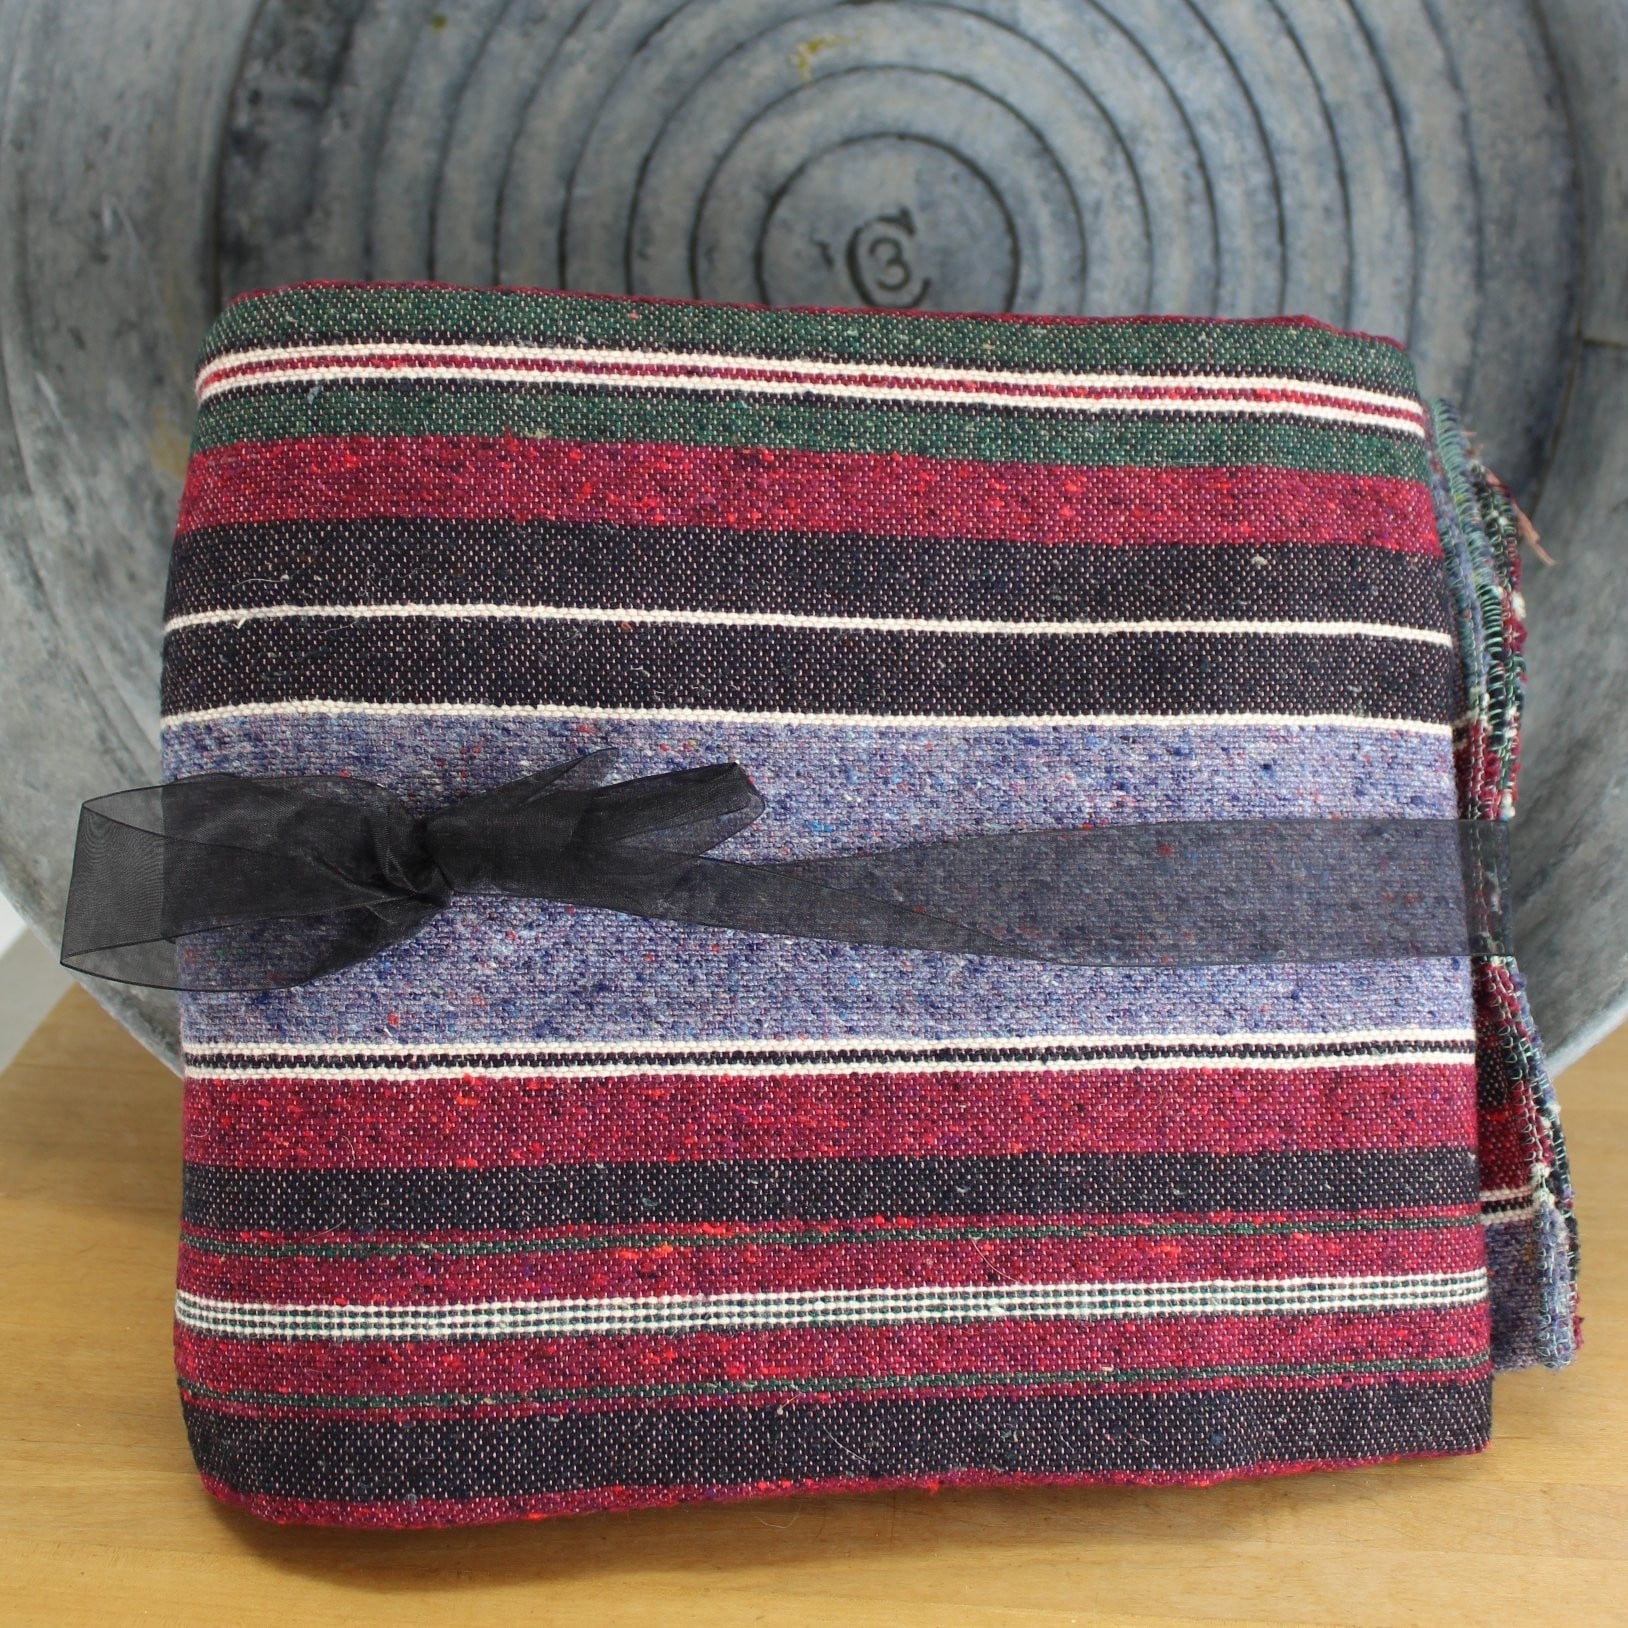 Vintage Unbranded Blanket Travel Rug - Loomed Cotton Blend Blues Purples Stripes - 80" X 58" Decor OOAK handsome wool blend likely ethnic piece from weaver traveler in Middle East